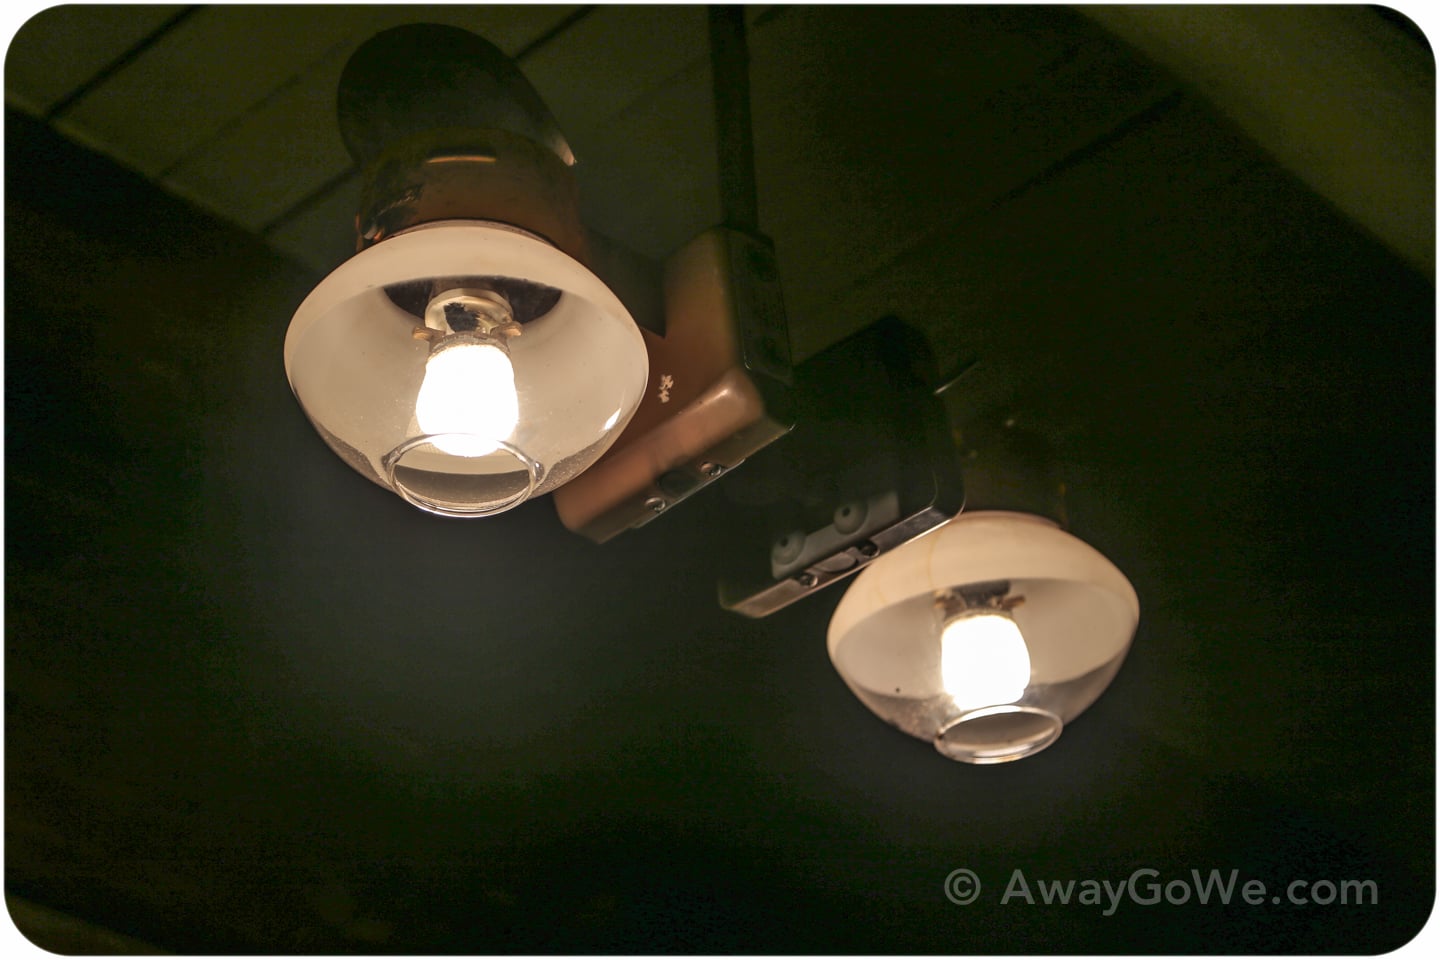 interrorem cabin olympic national park propane lamps